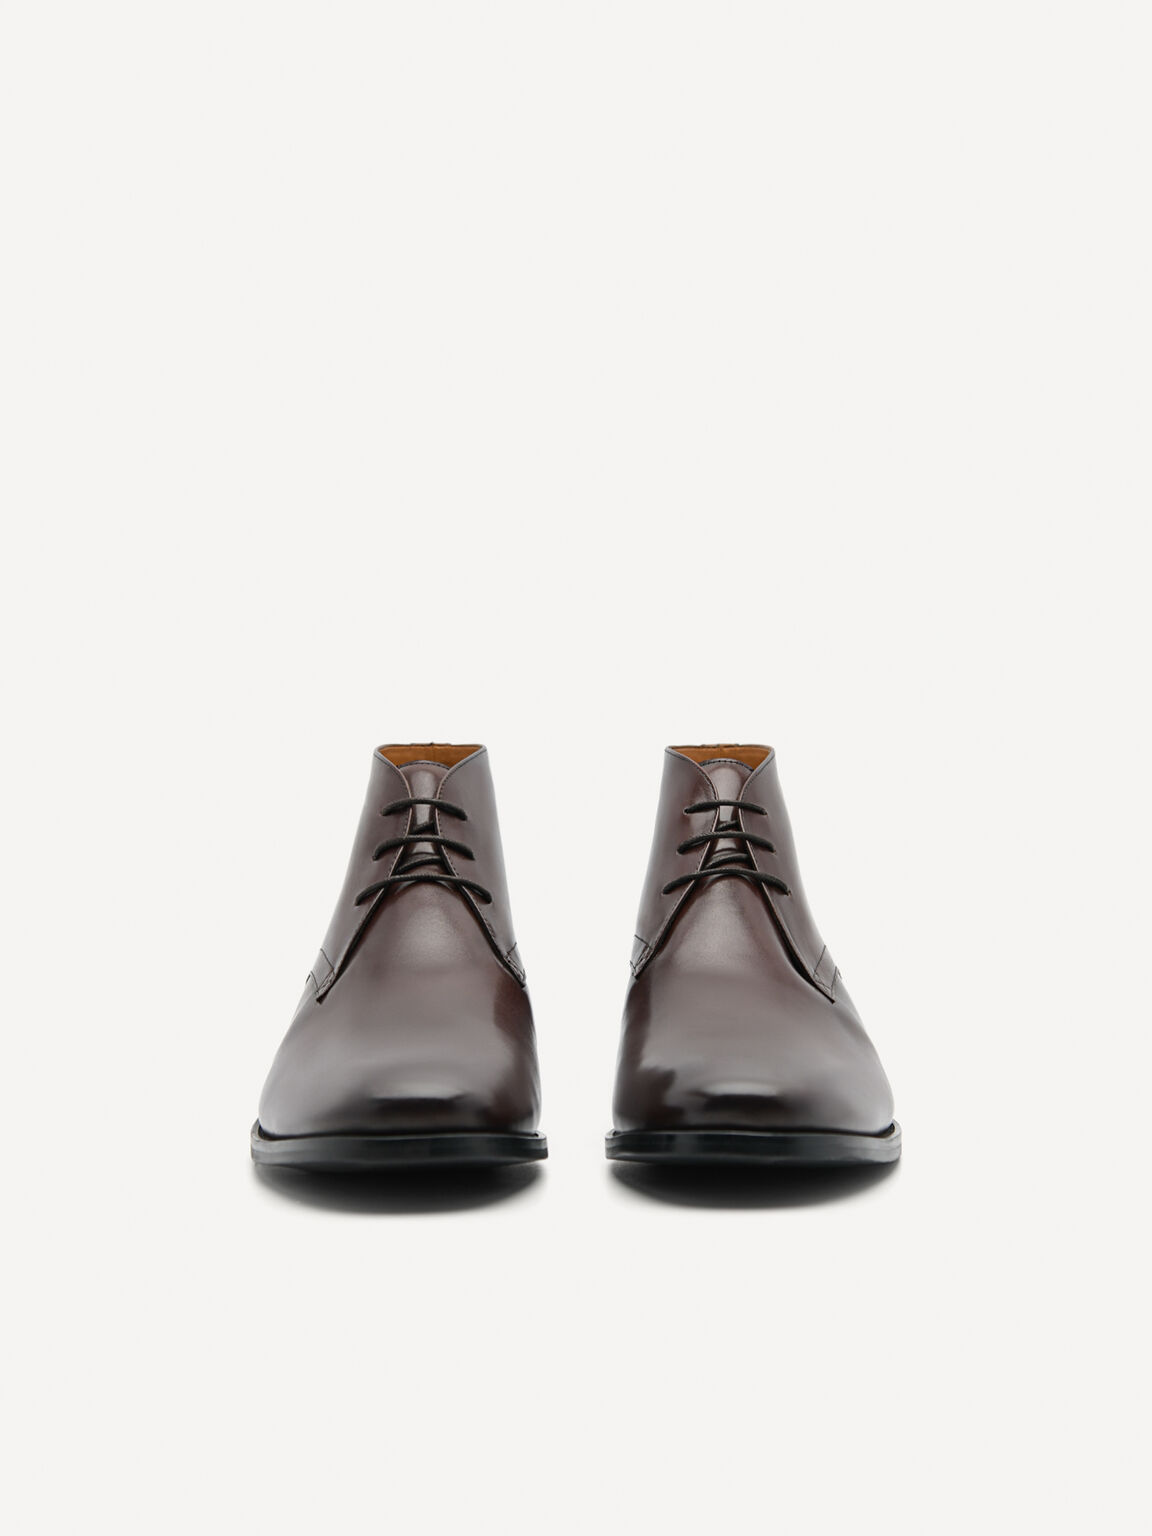 Oscar Ankle Boots, Dark Brown